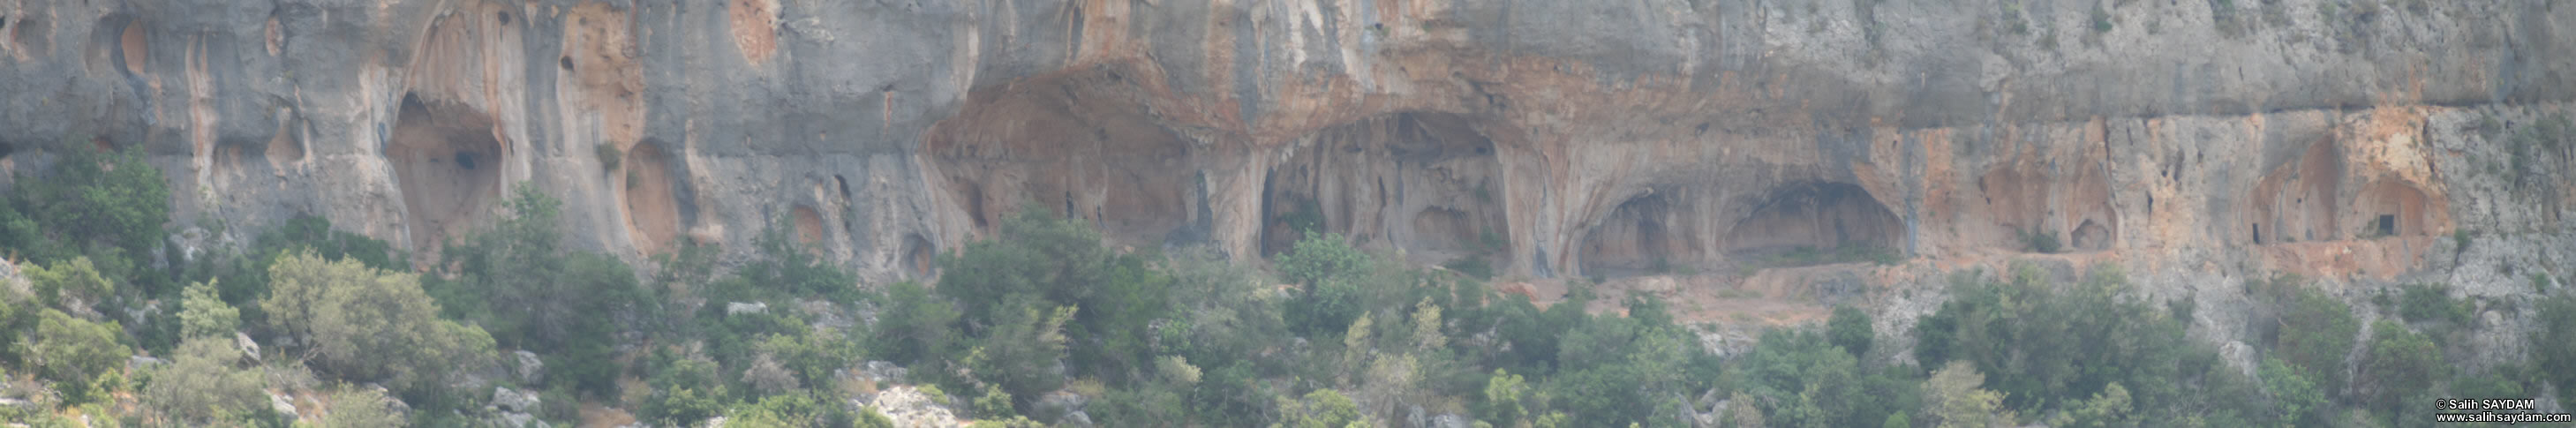 Sightings from Human Boulders (Adamkayalar) Panorama 2 (Mersin, Erdemli)